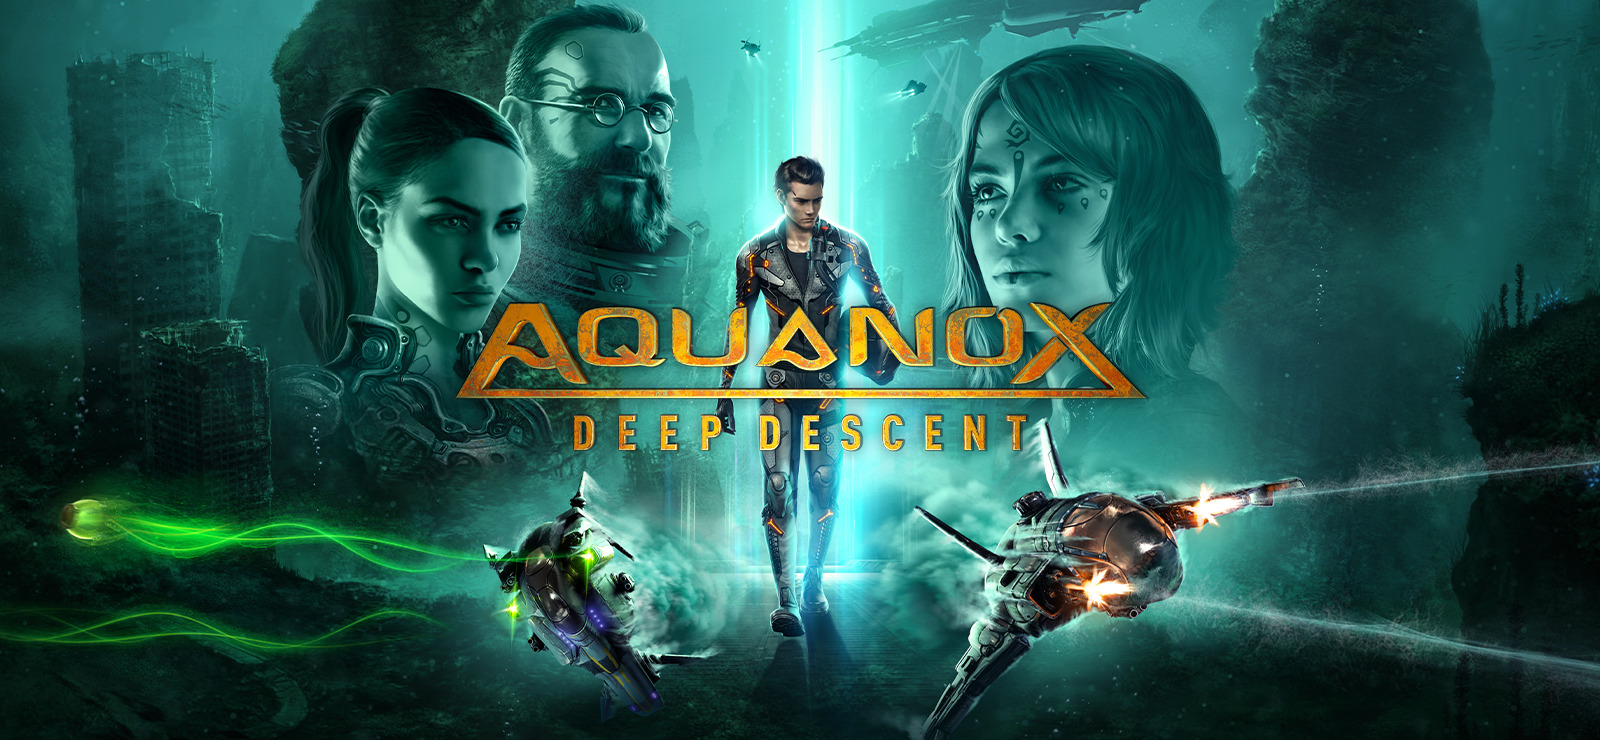 download aquanox deep for free